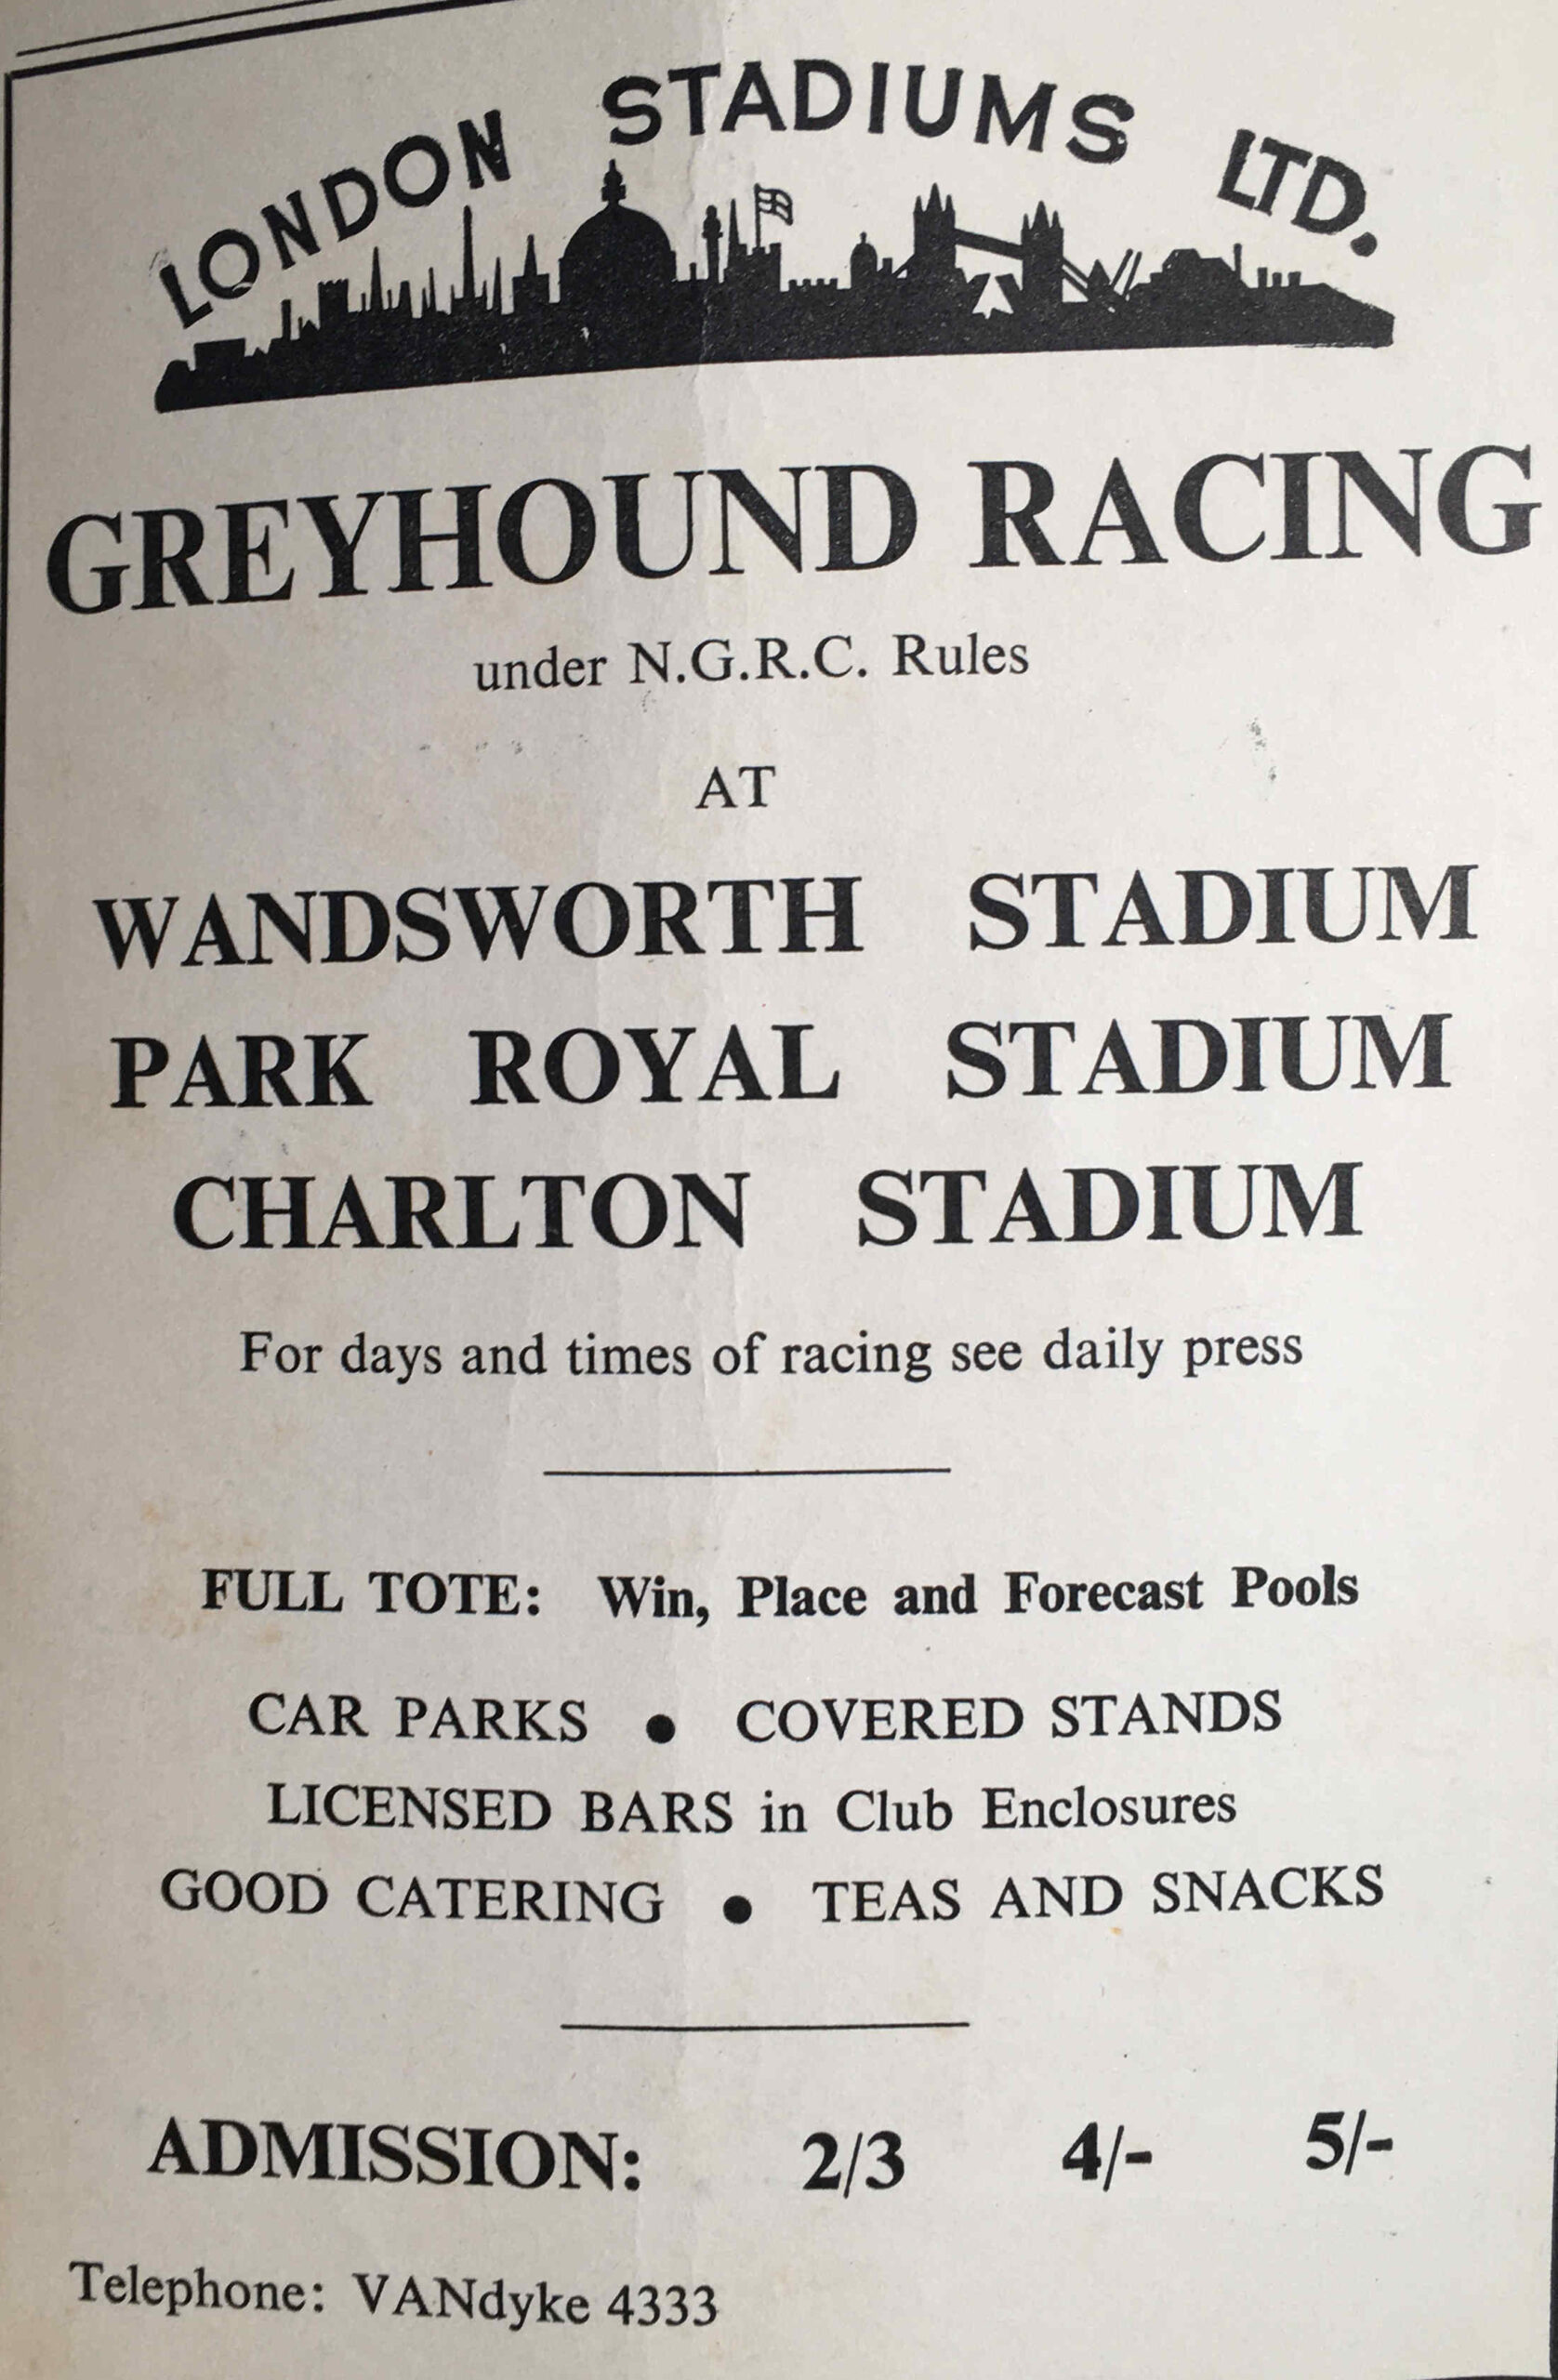 Wandsworth Stadium